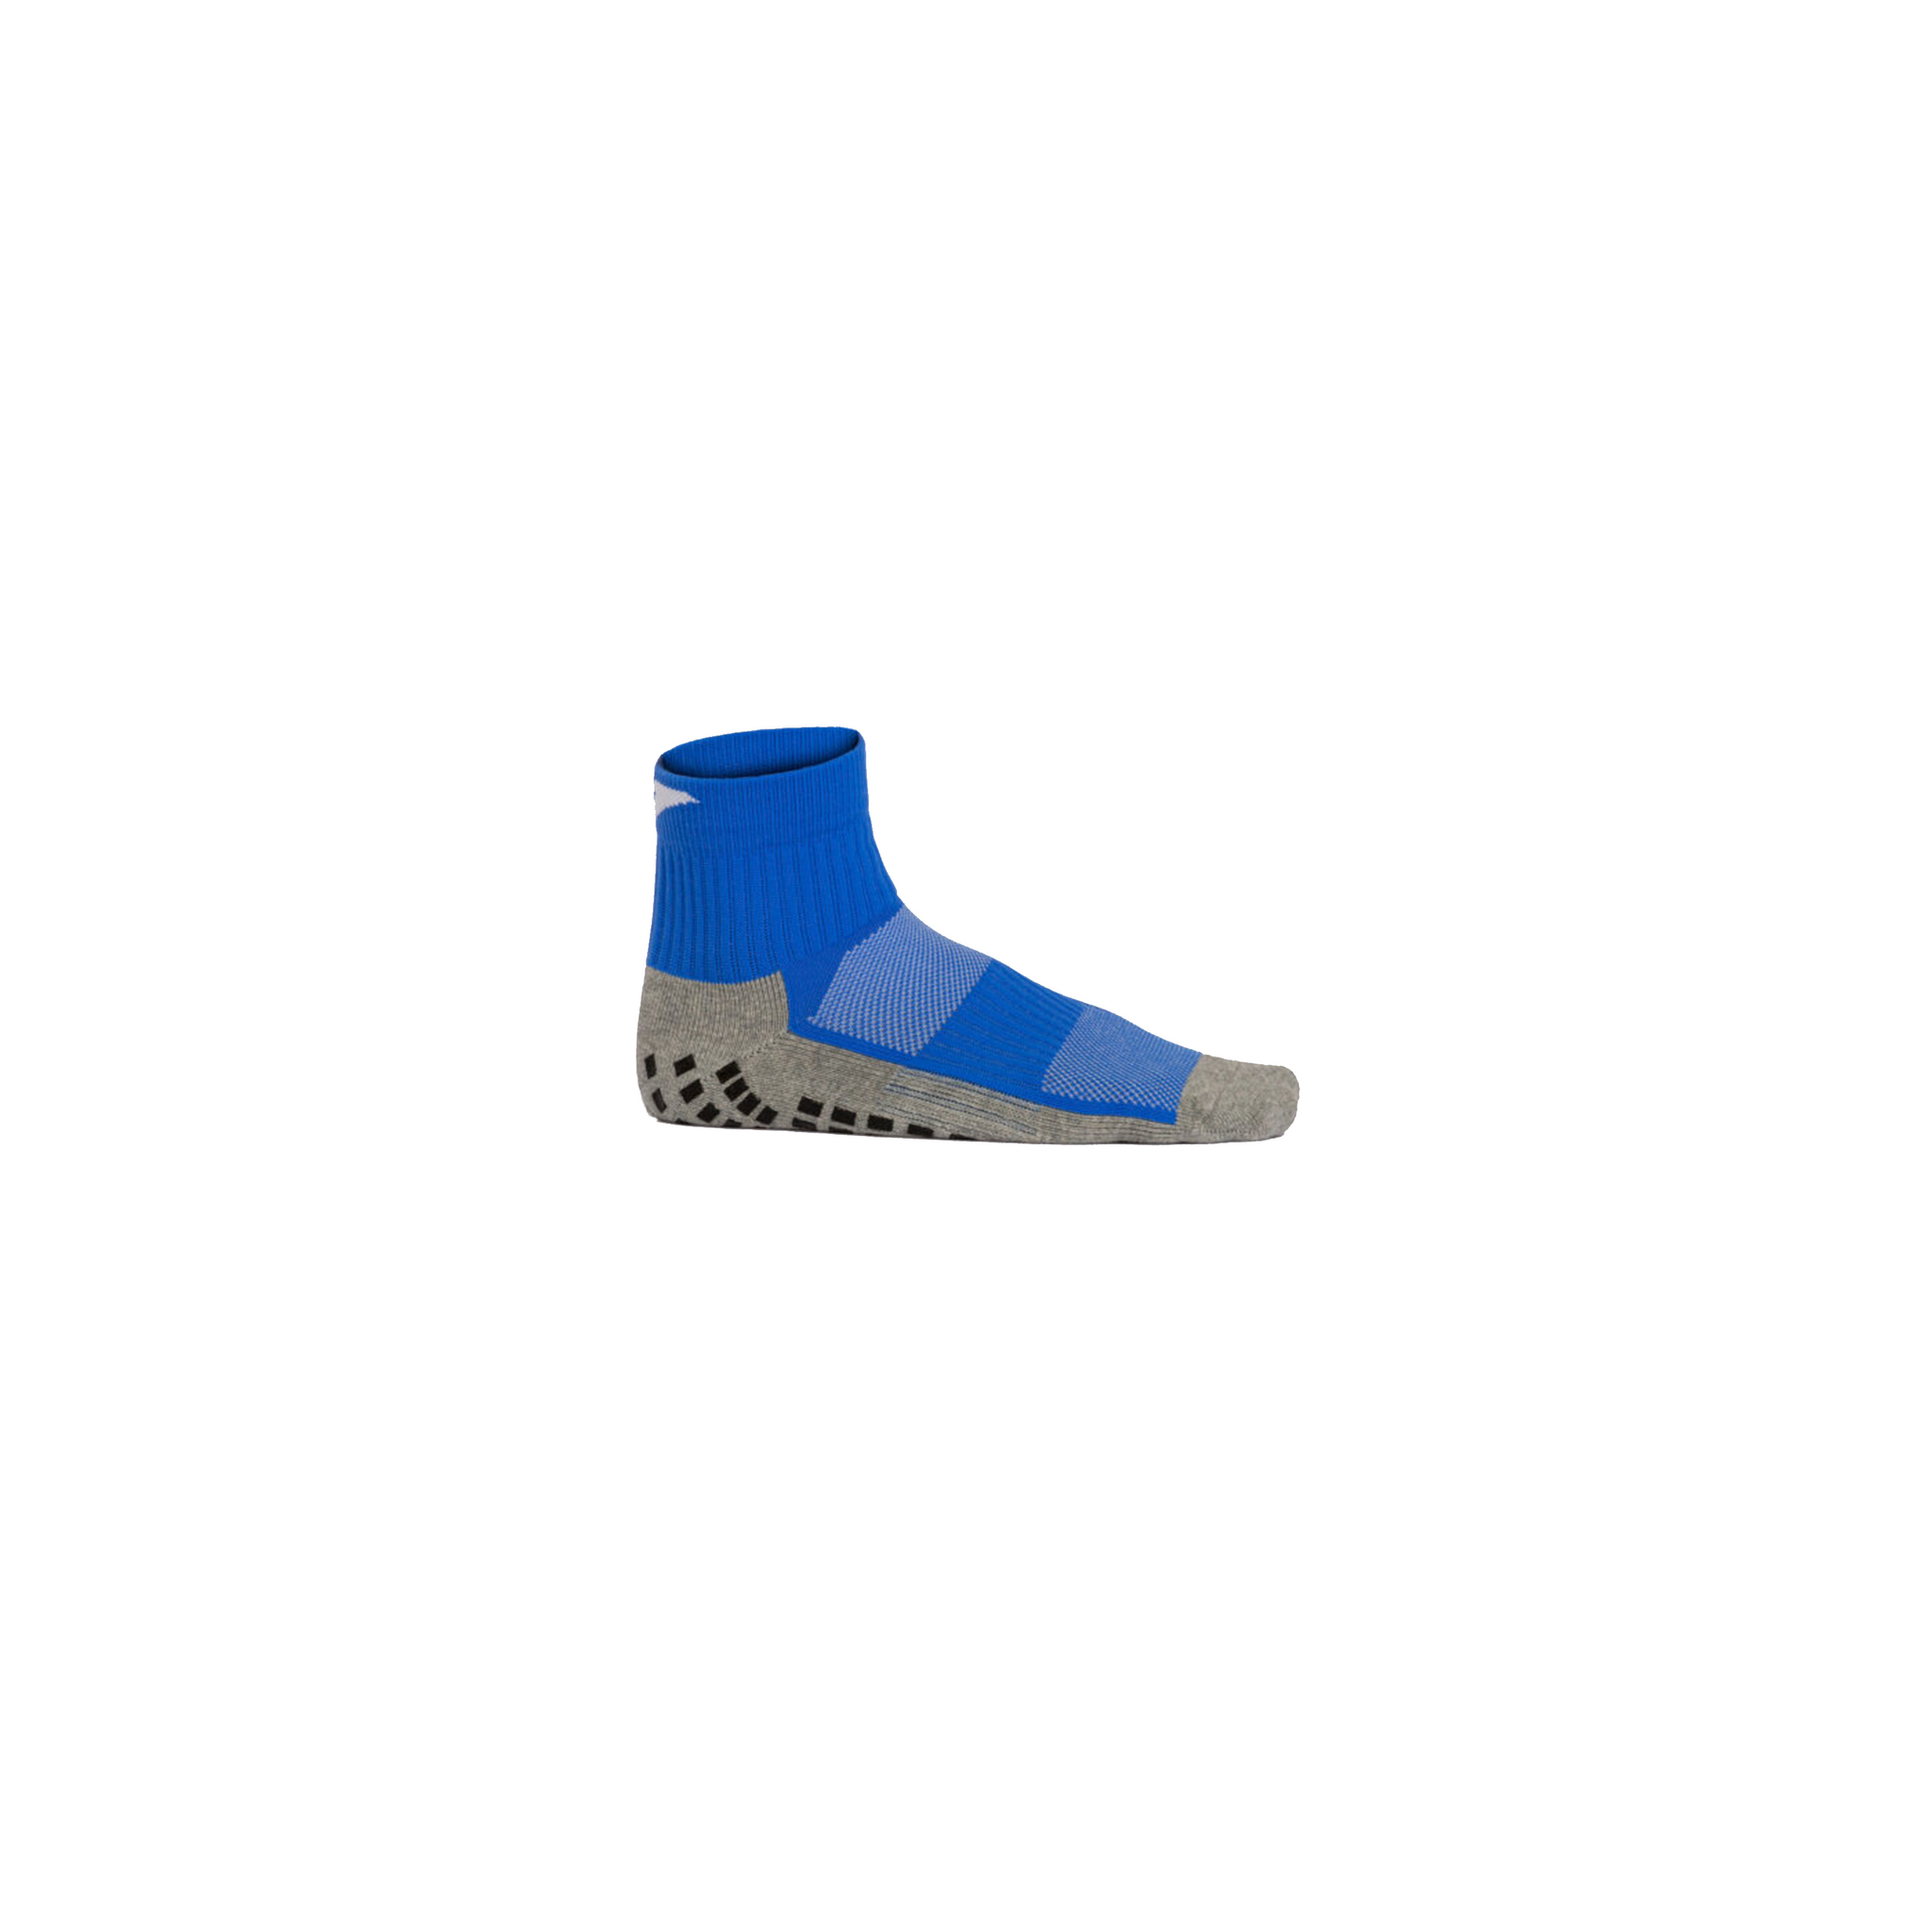 JOMA Short Anti Slip Socks (Royal Blue)